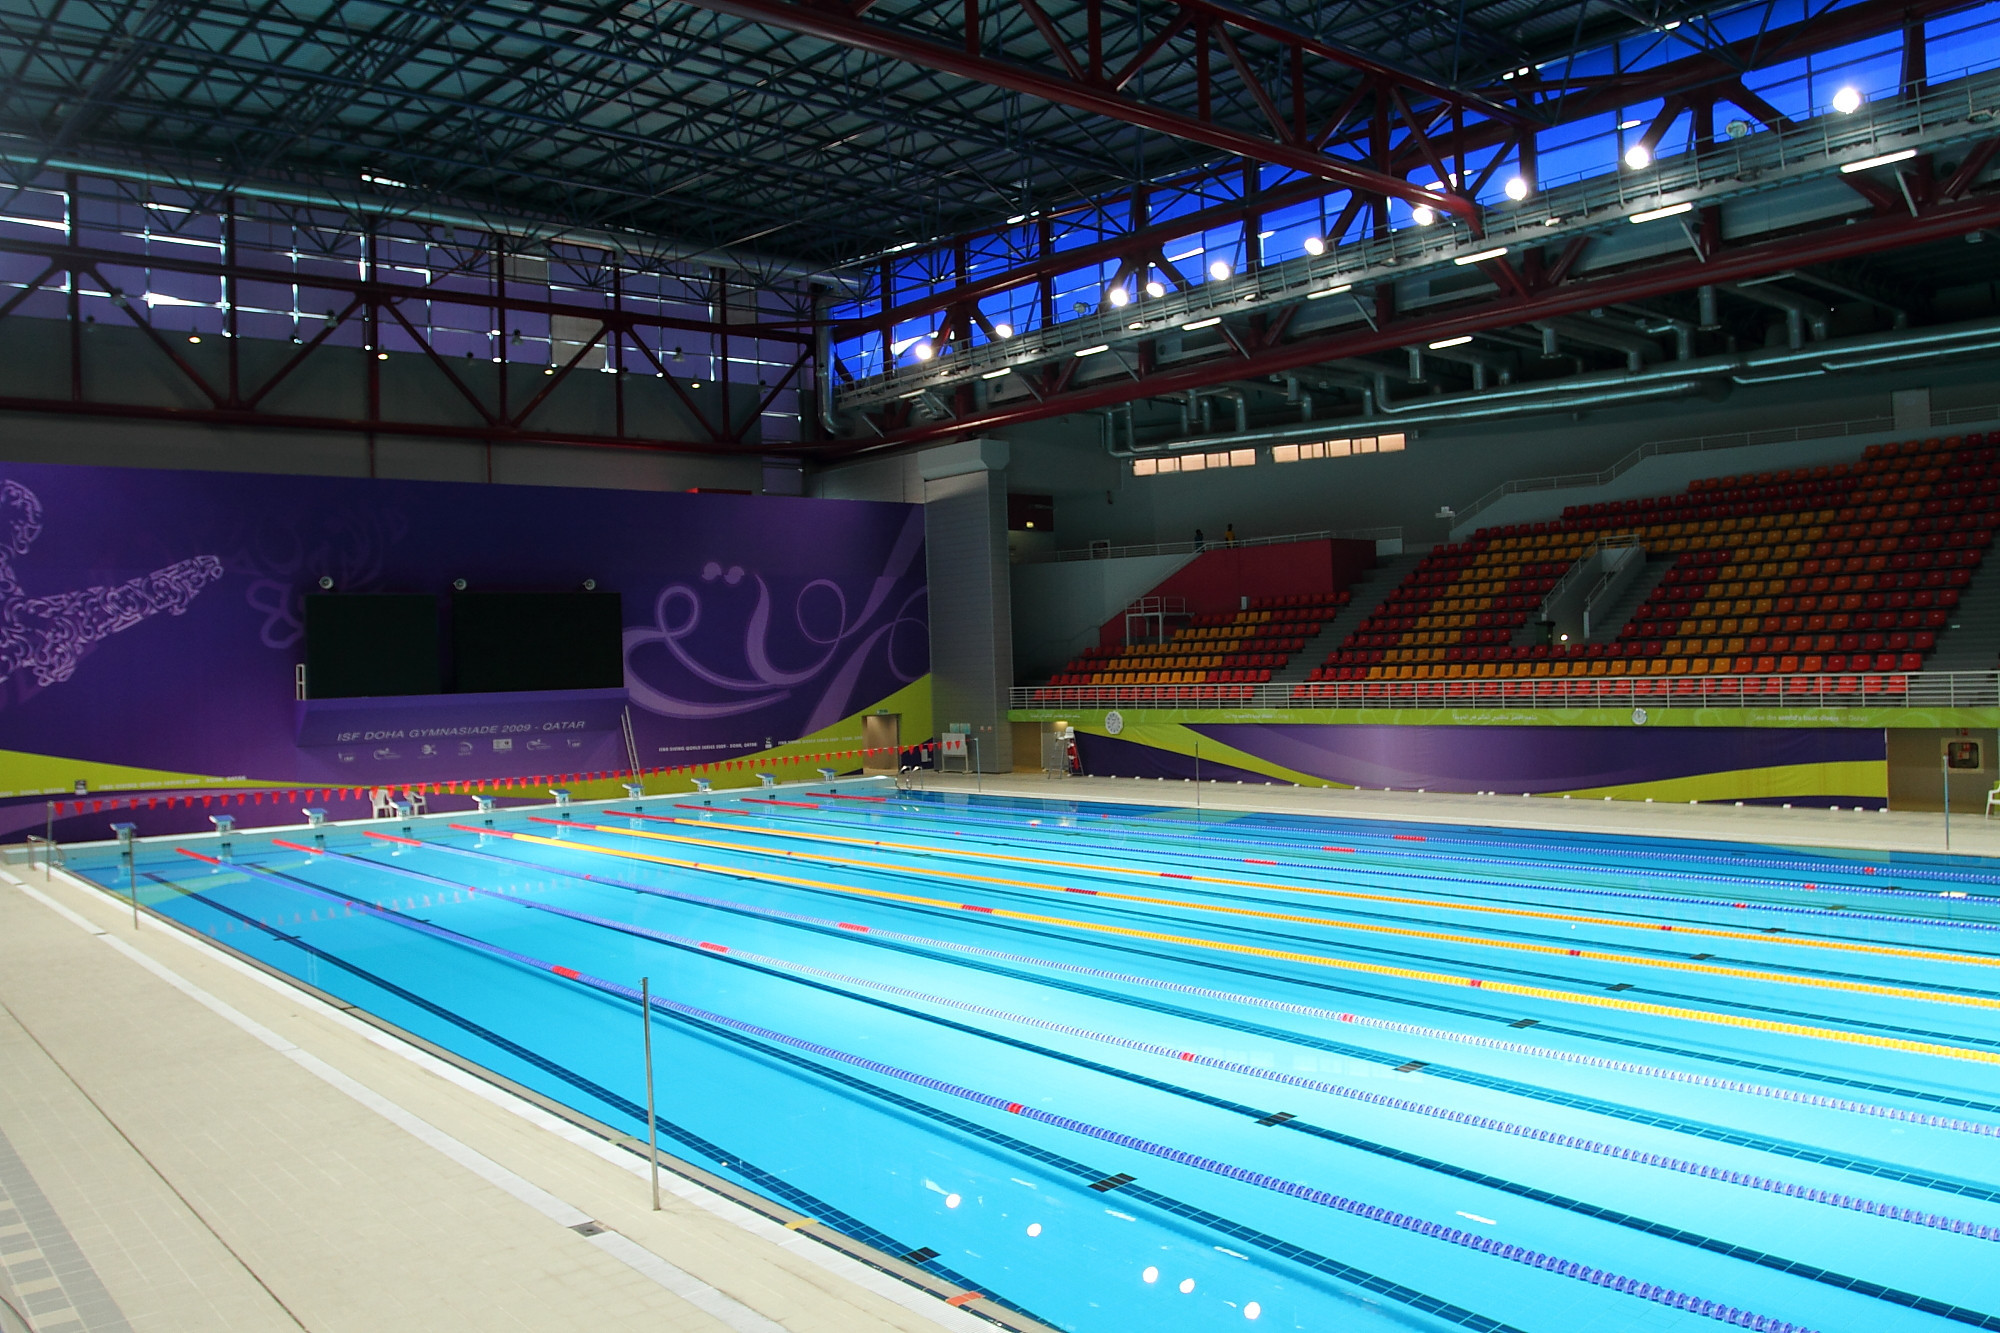 The Hamad Aquatic can accommodate 4,500 spectators. WORLD AQUATICS